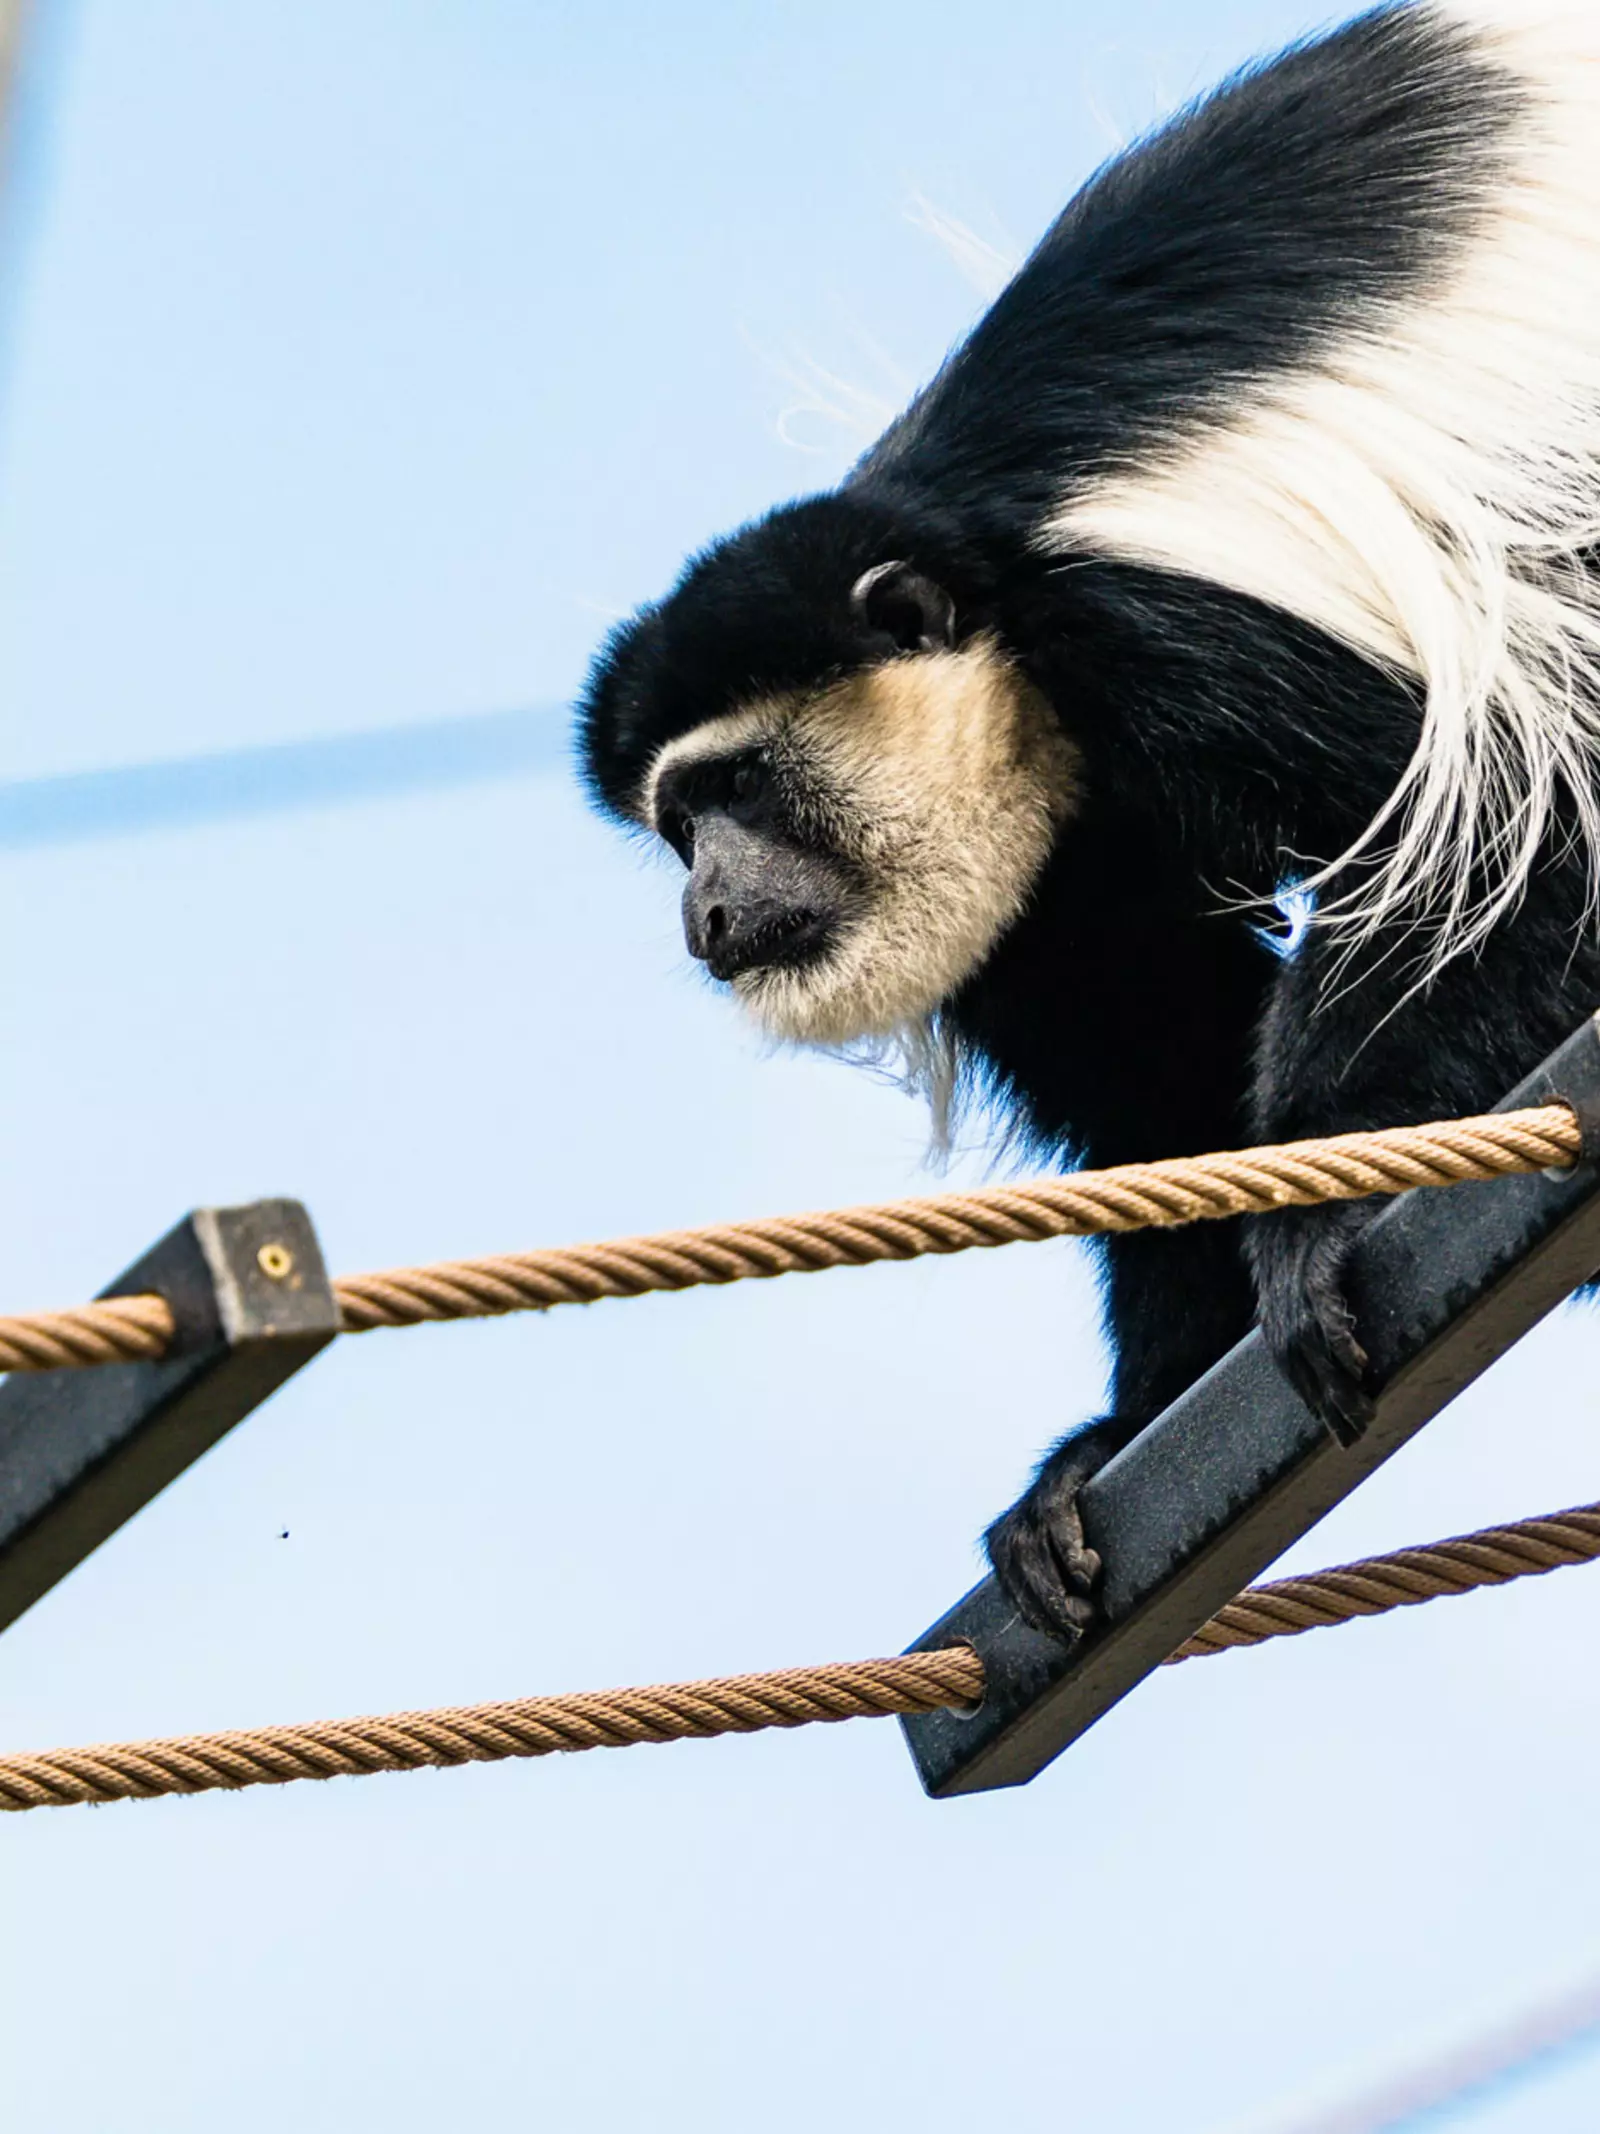 Colobus monkey walking across a rope ladder